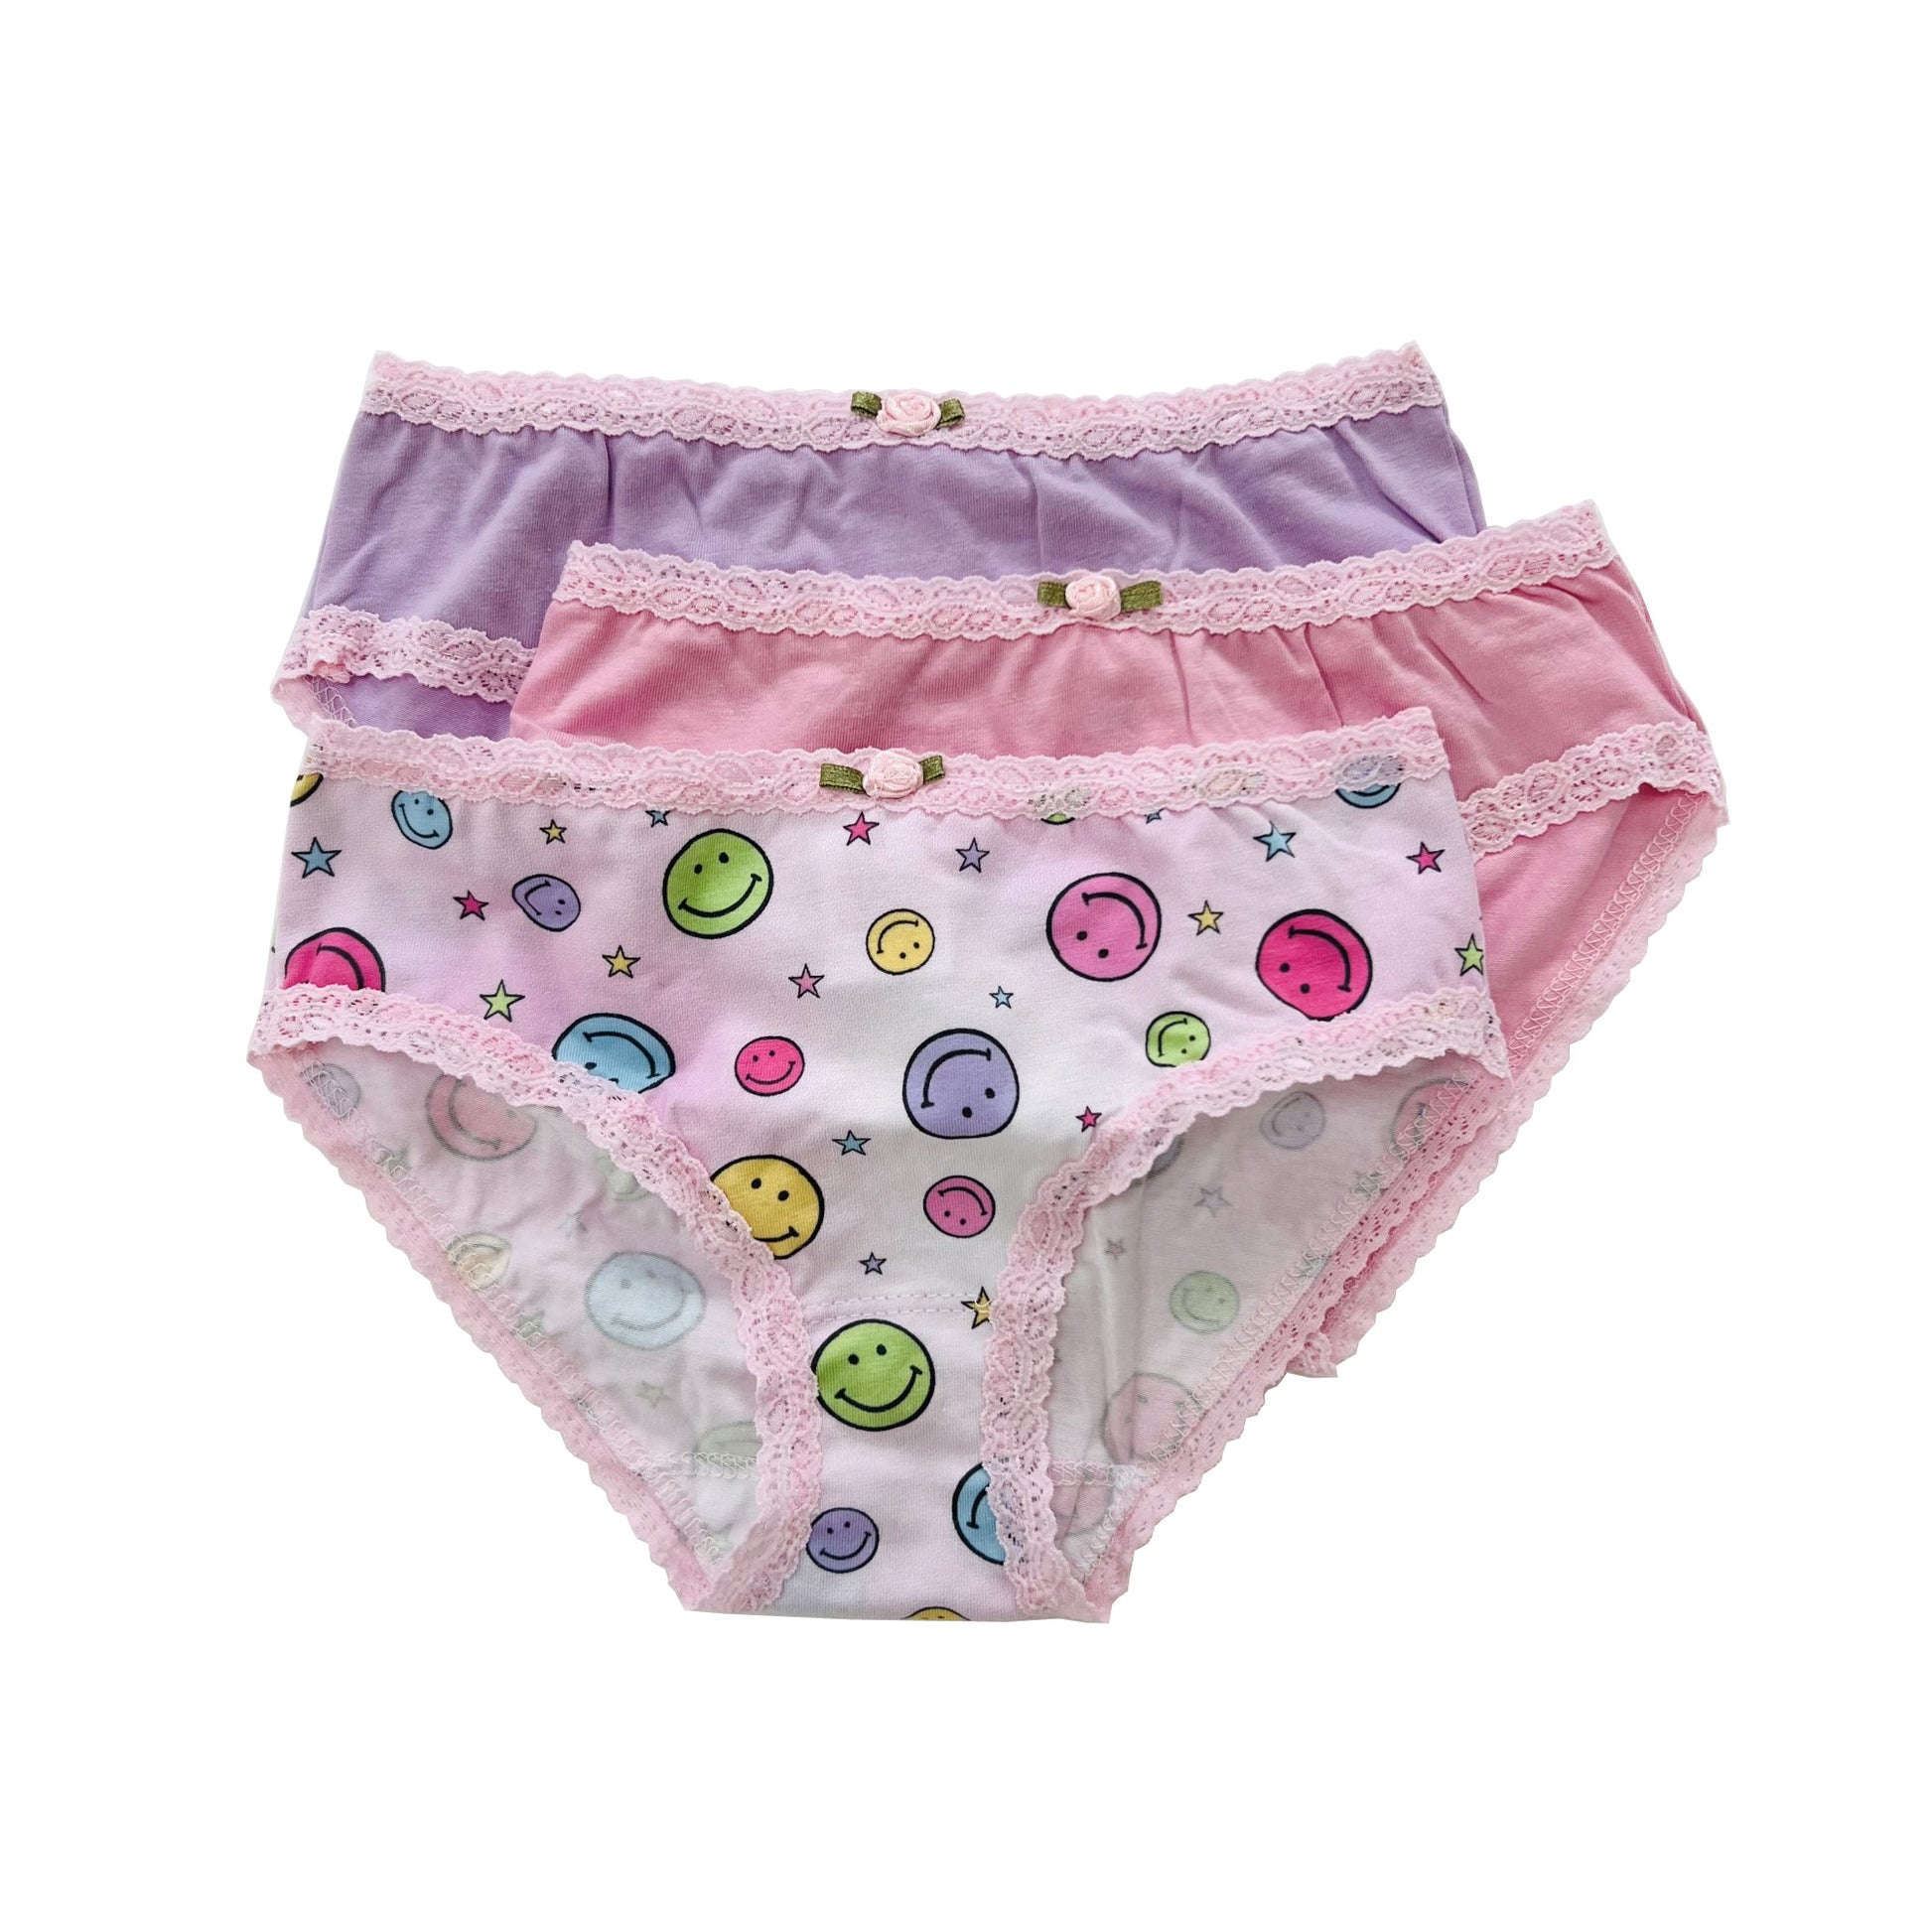 U20 Esme Girls Comfortable Underwear XS S M L XL PT 6 8 10 12 14 panty in  Solid